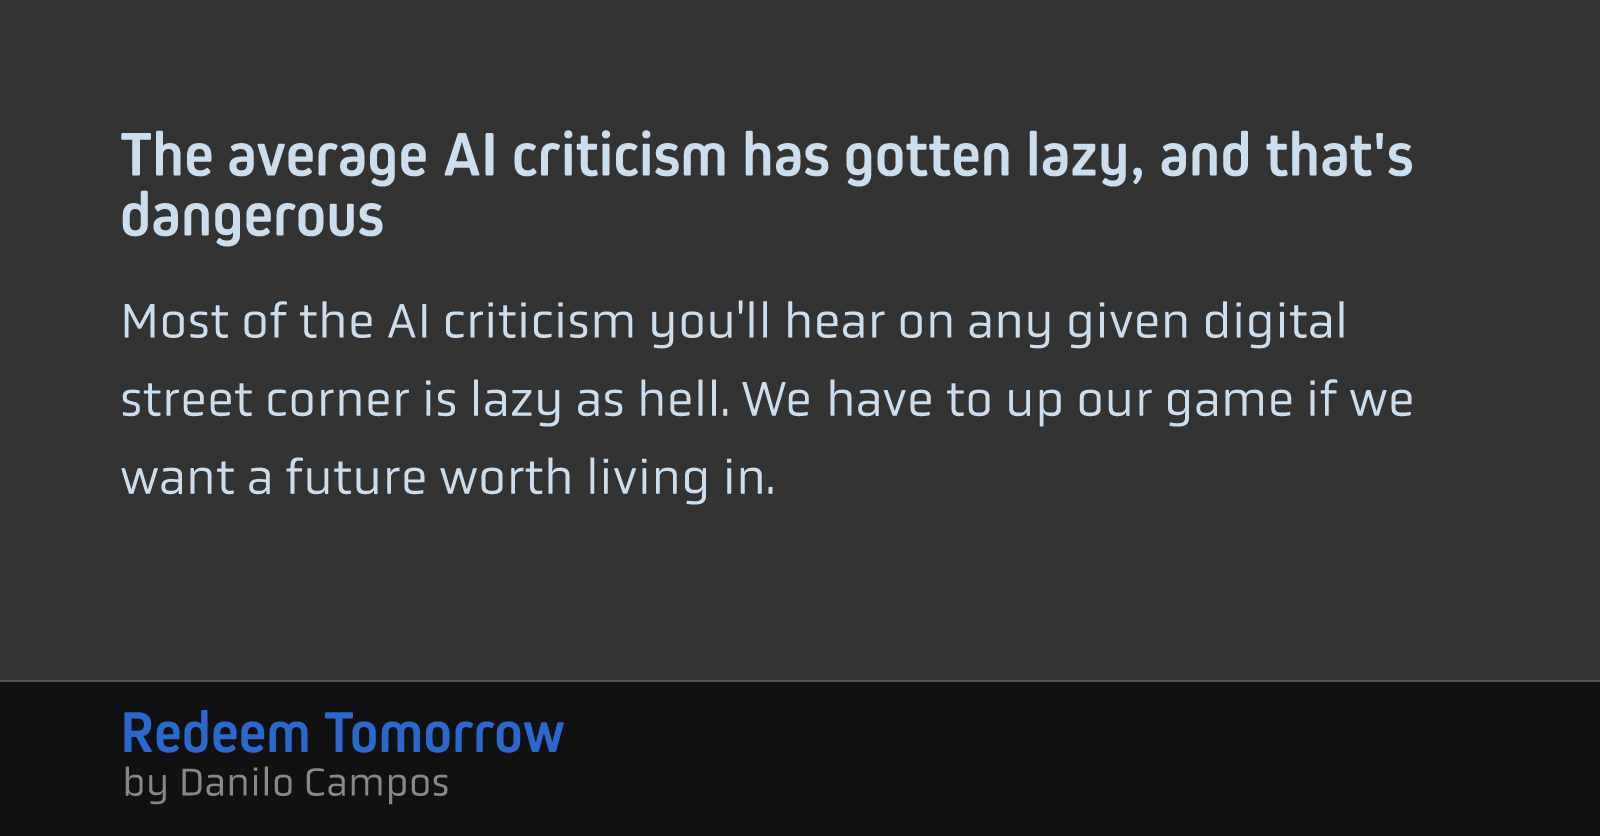 The average AI criticism has gotten lazy, and that's dangerous